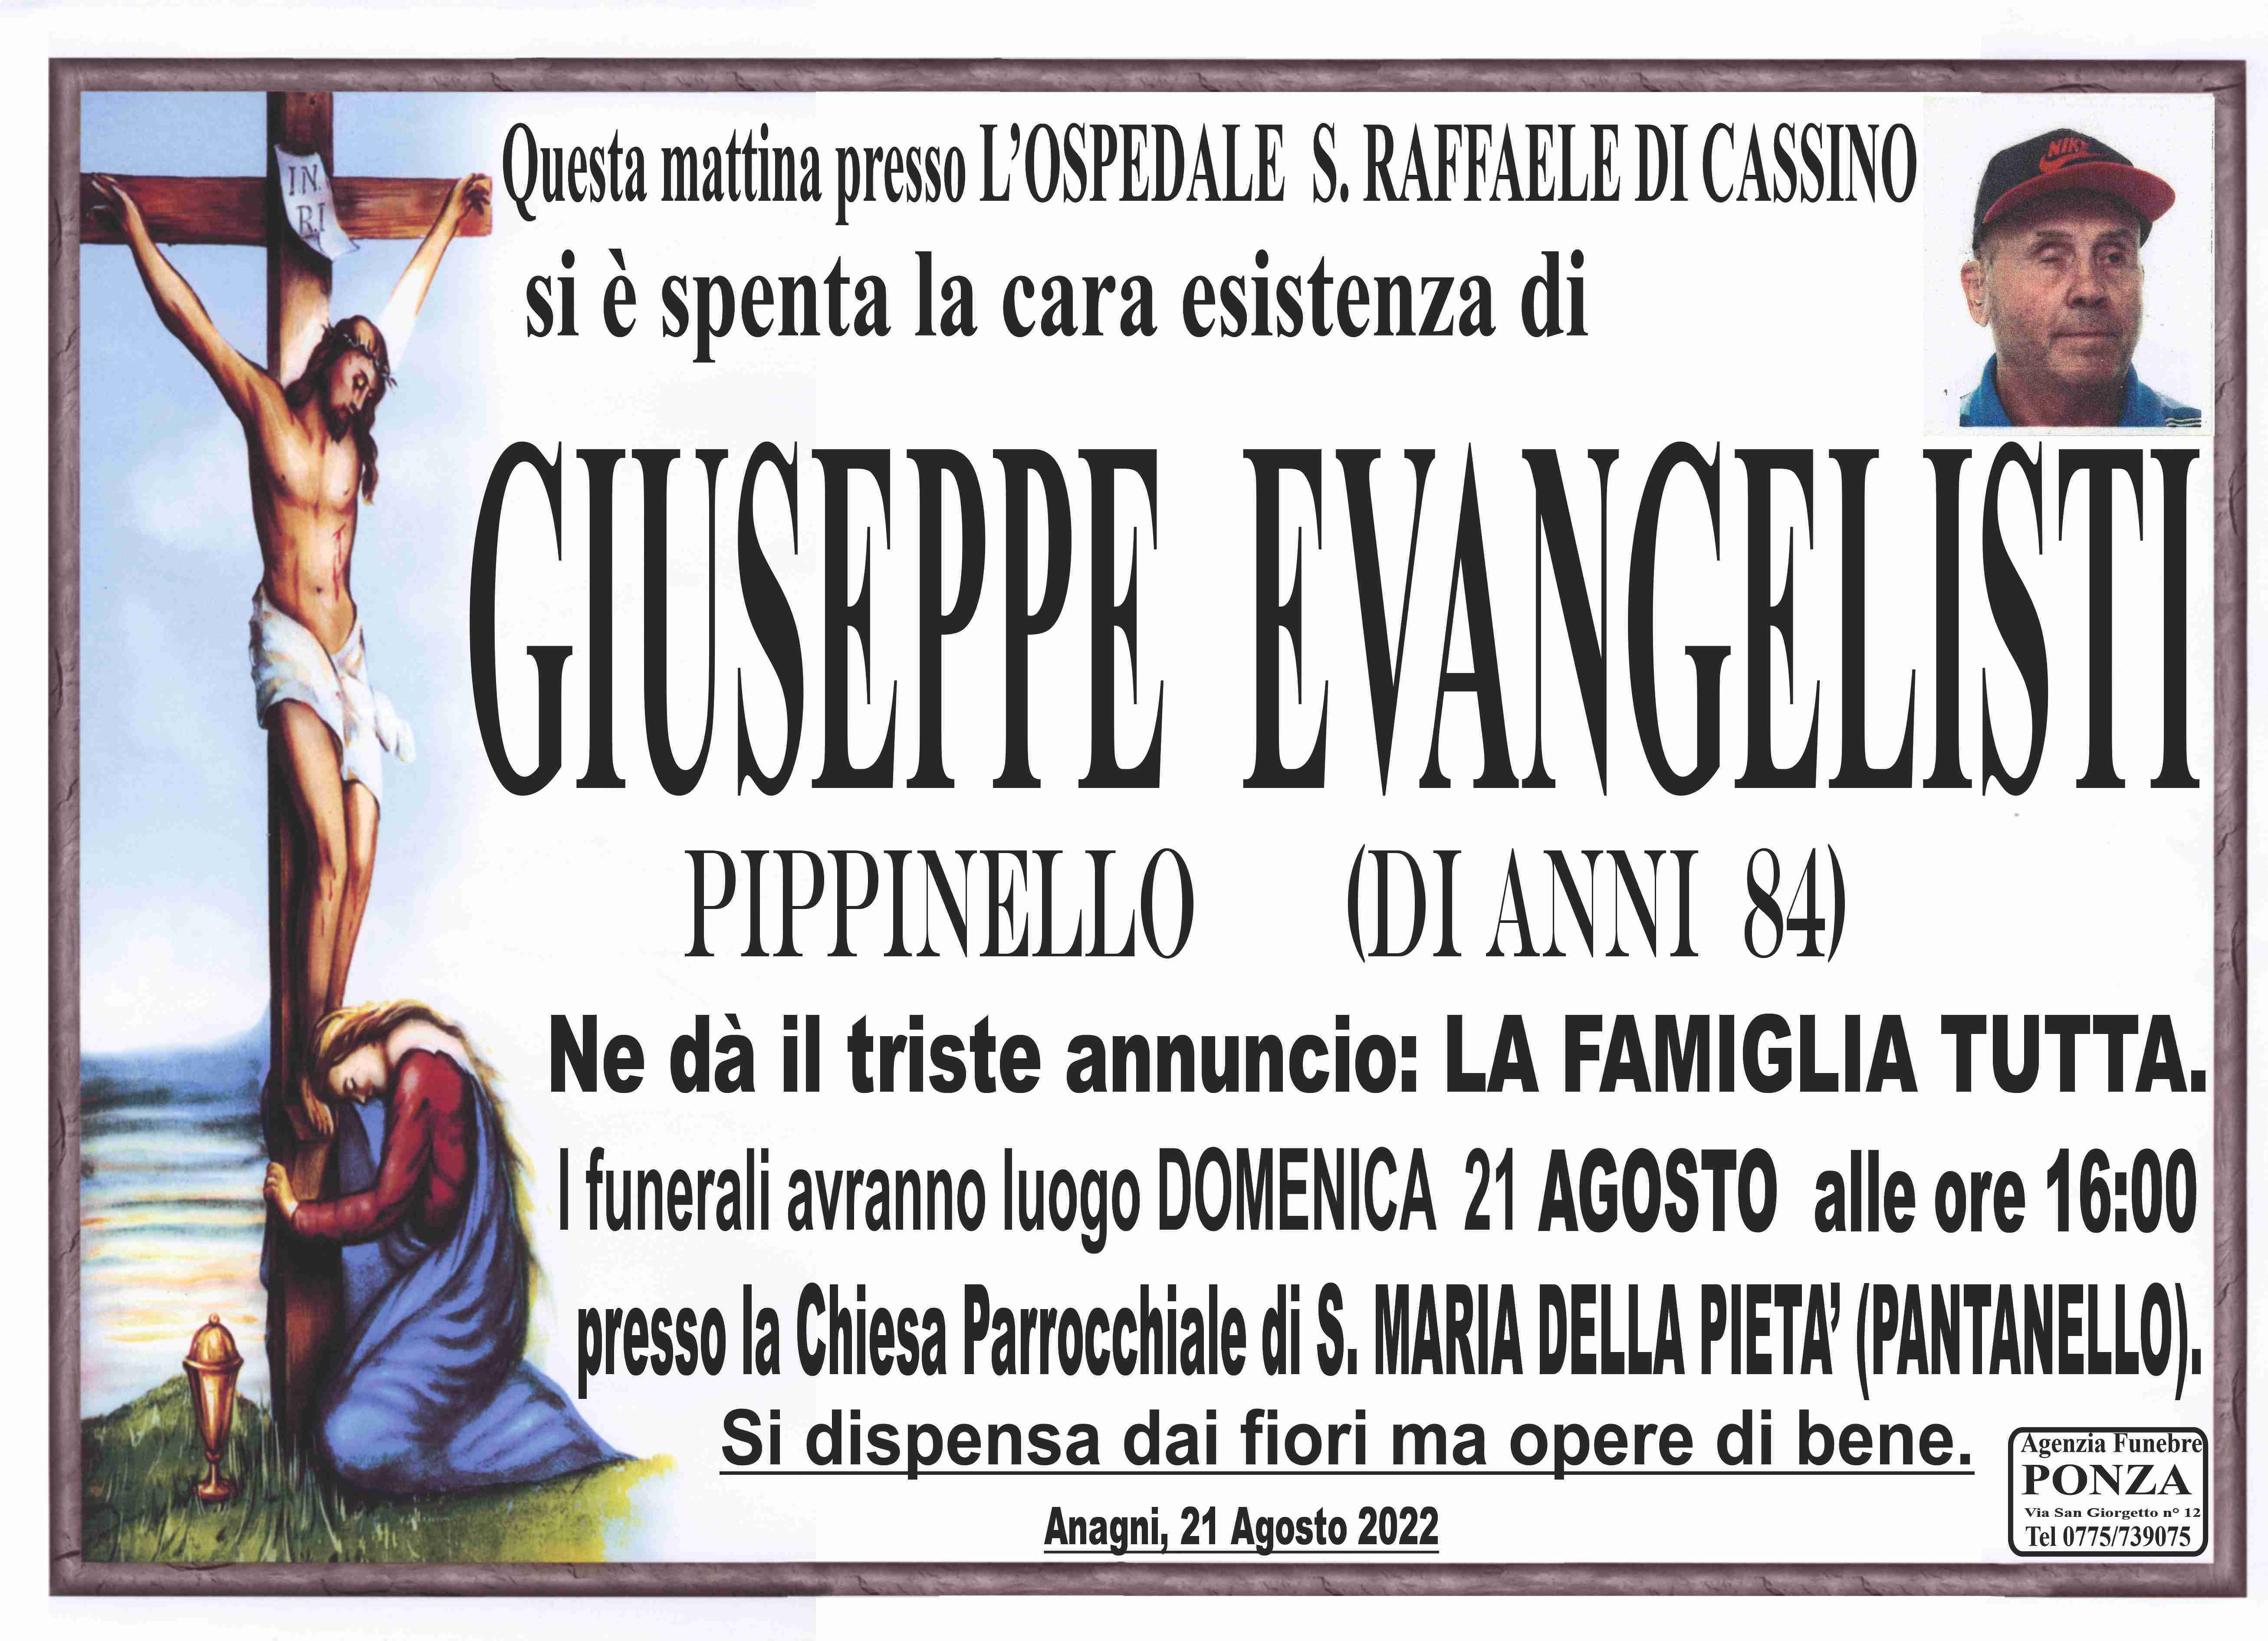 Giuseppe Evangelisti